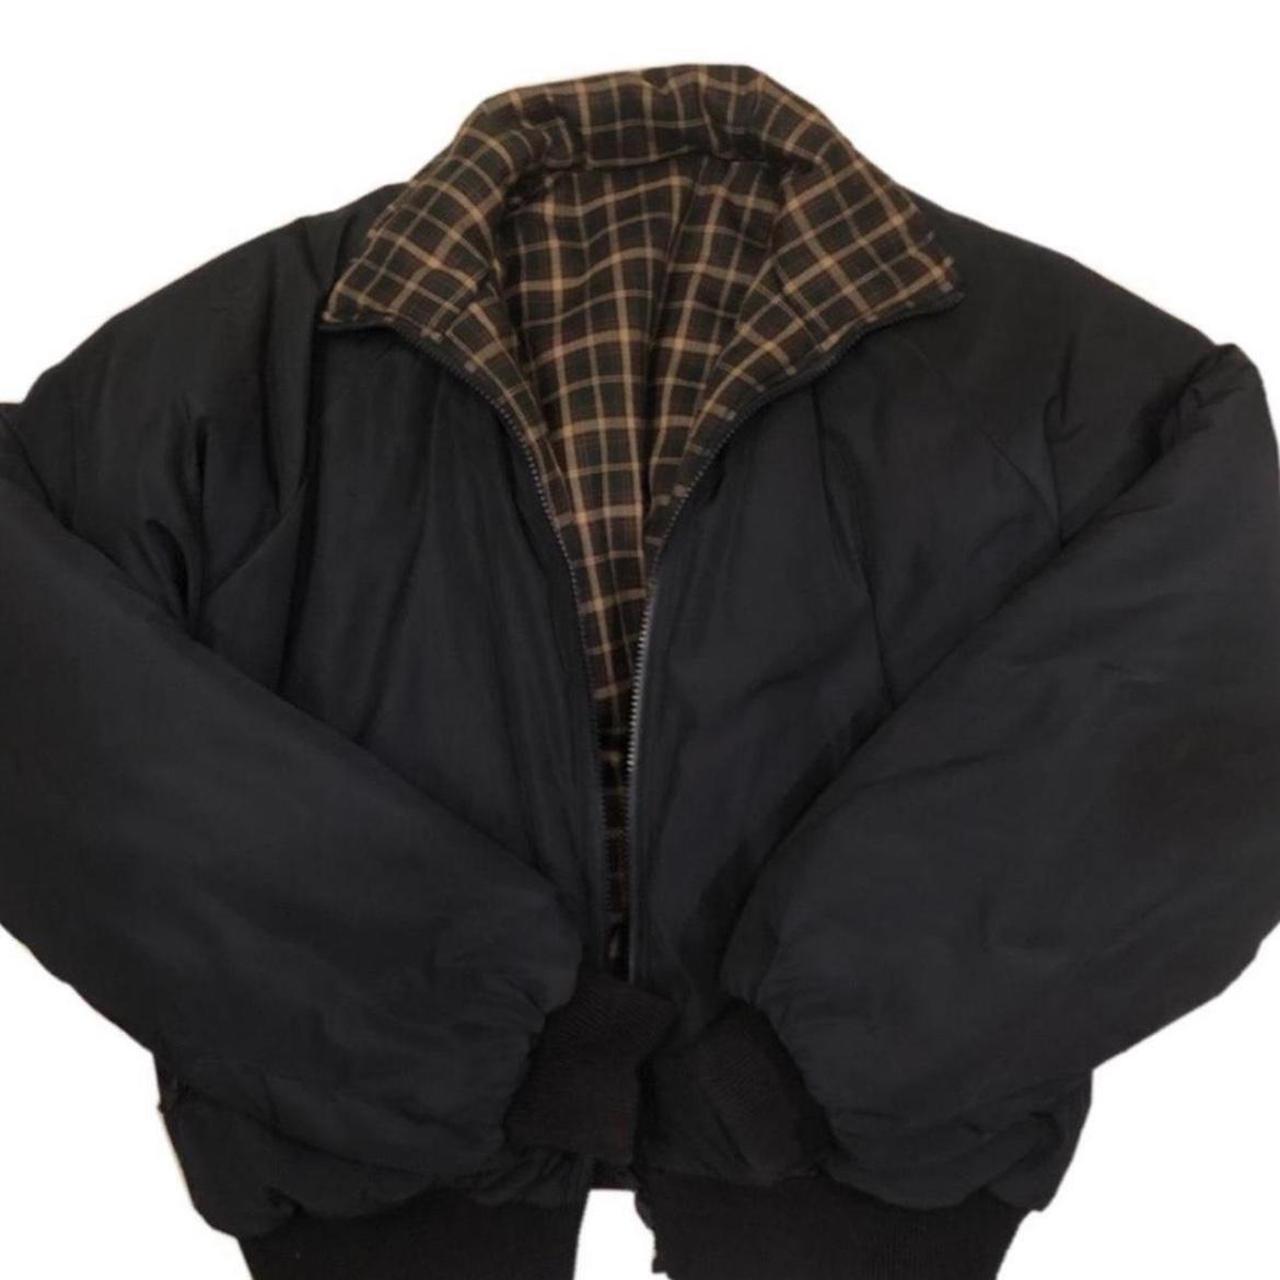 Brandy Melville reversible faith puffer jacket